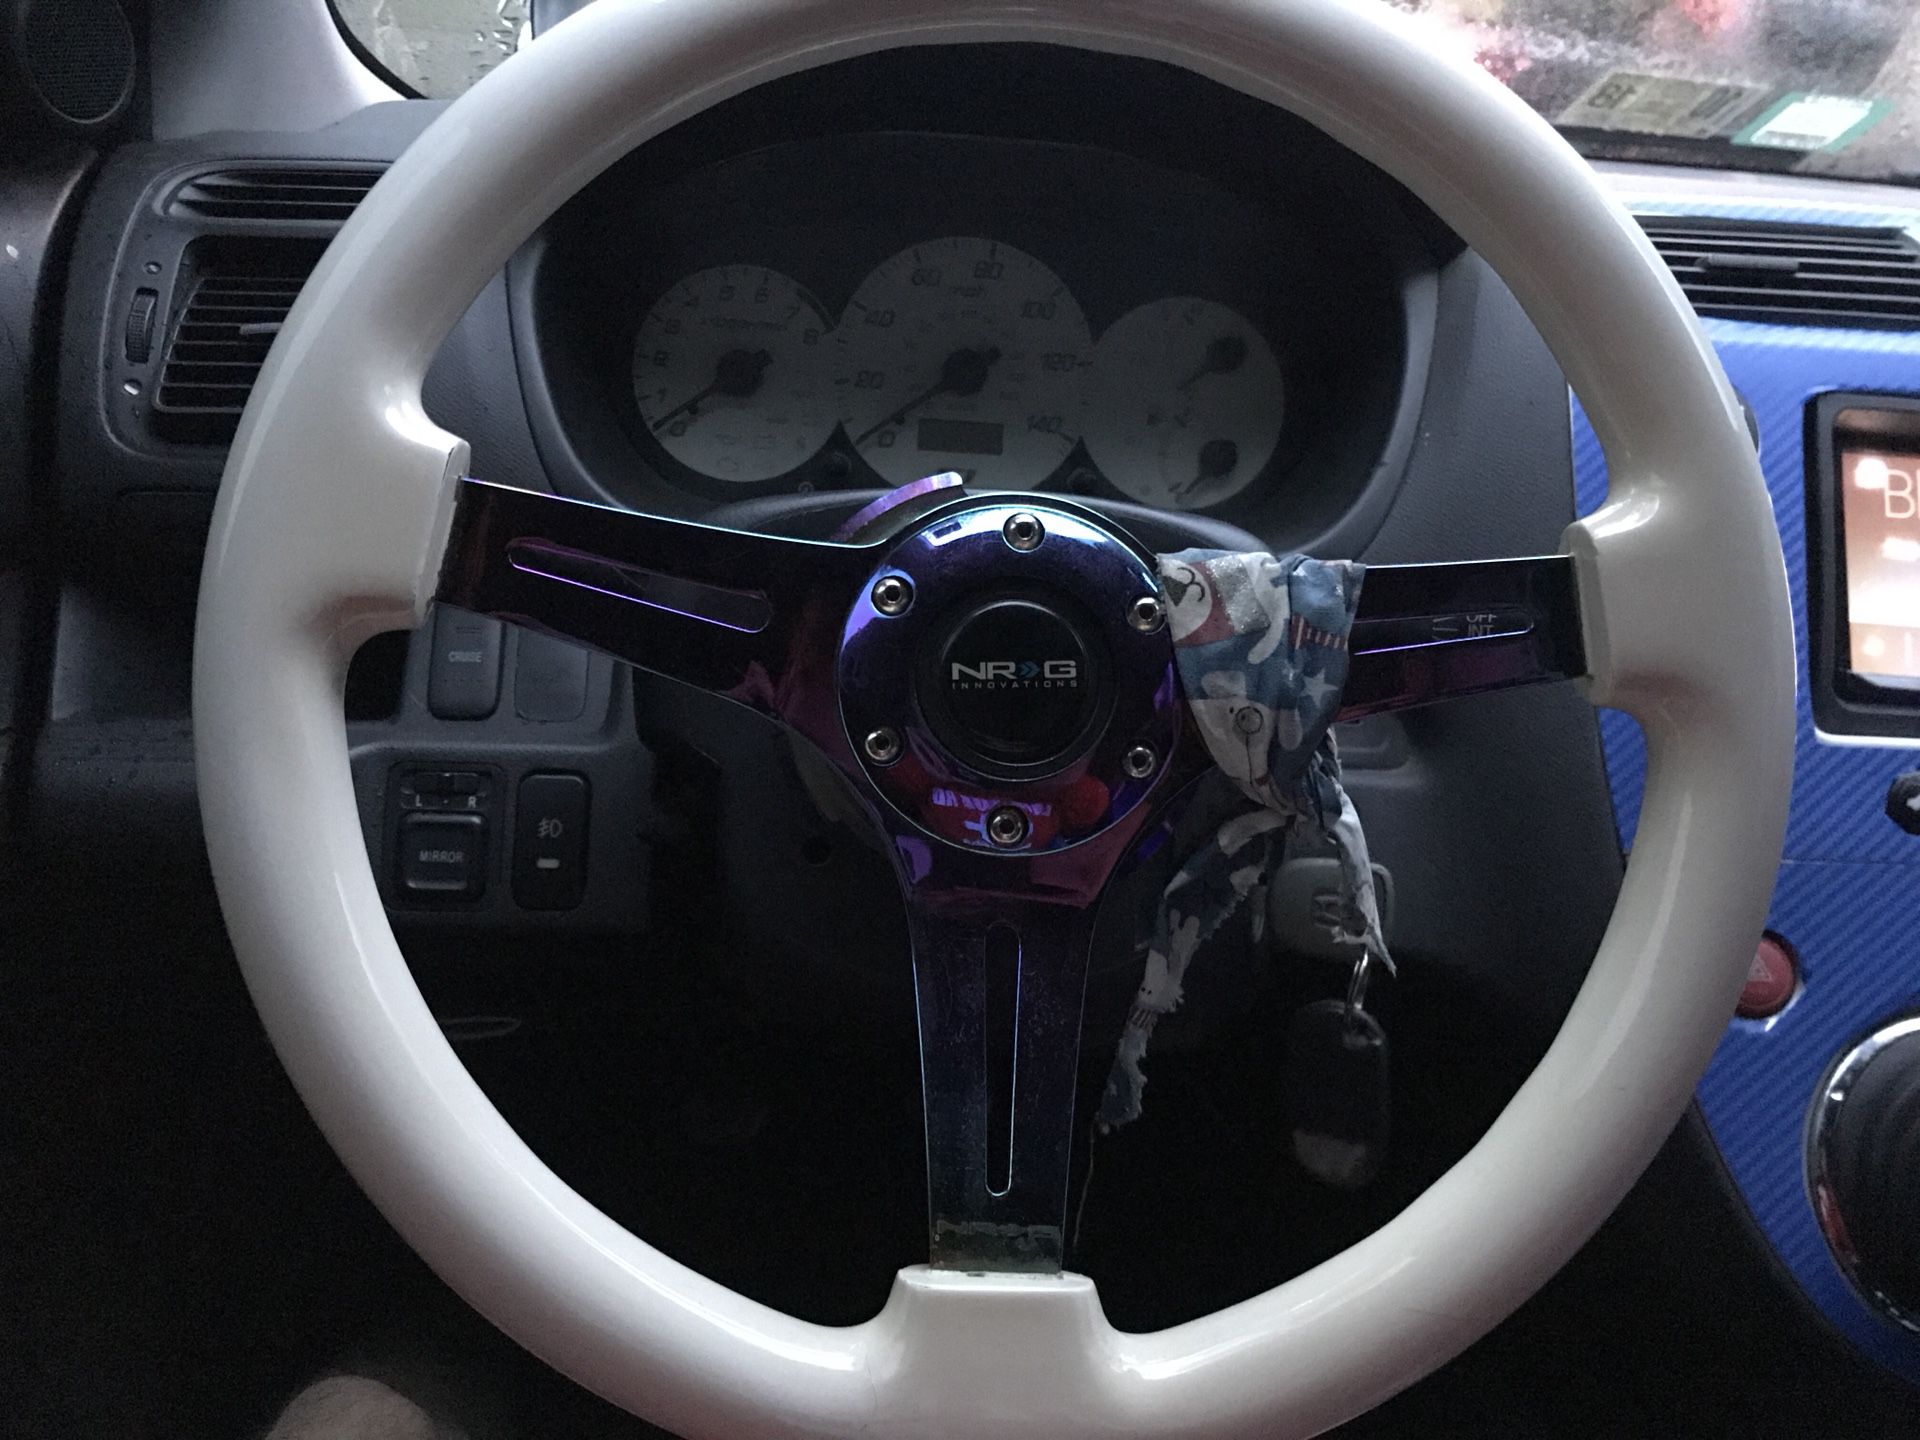 NRG steering wheel, quick release